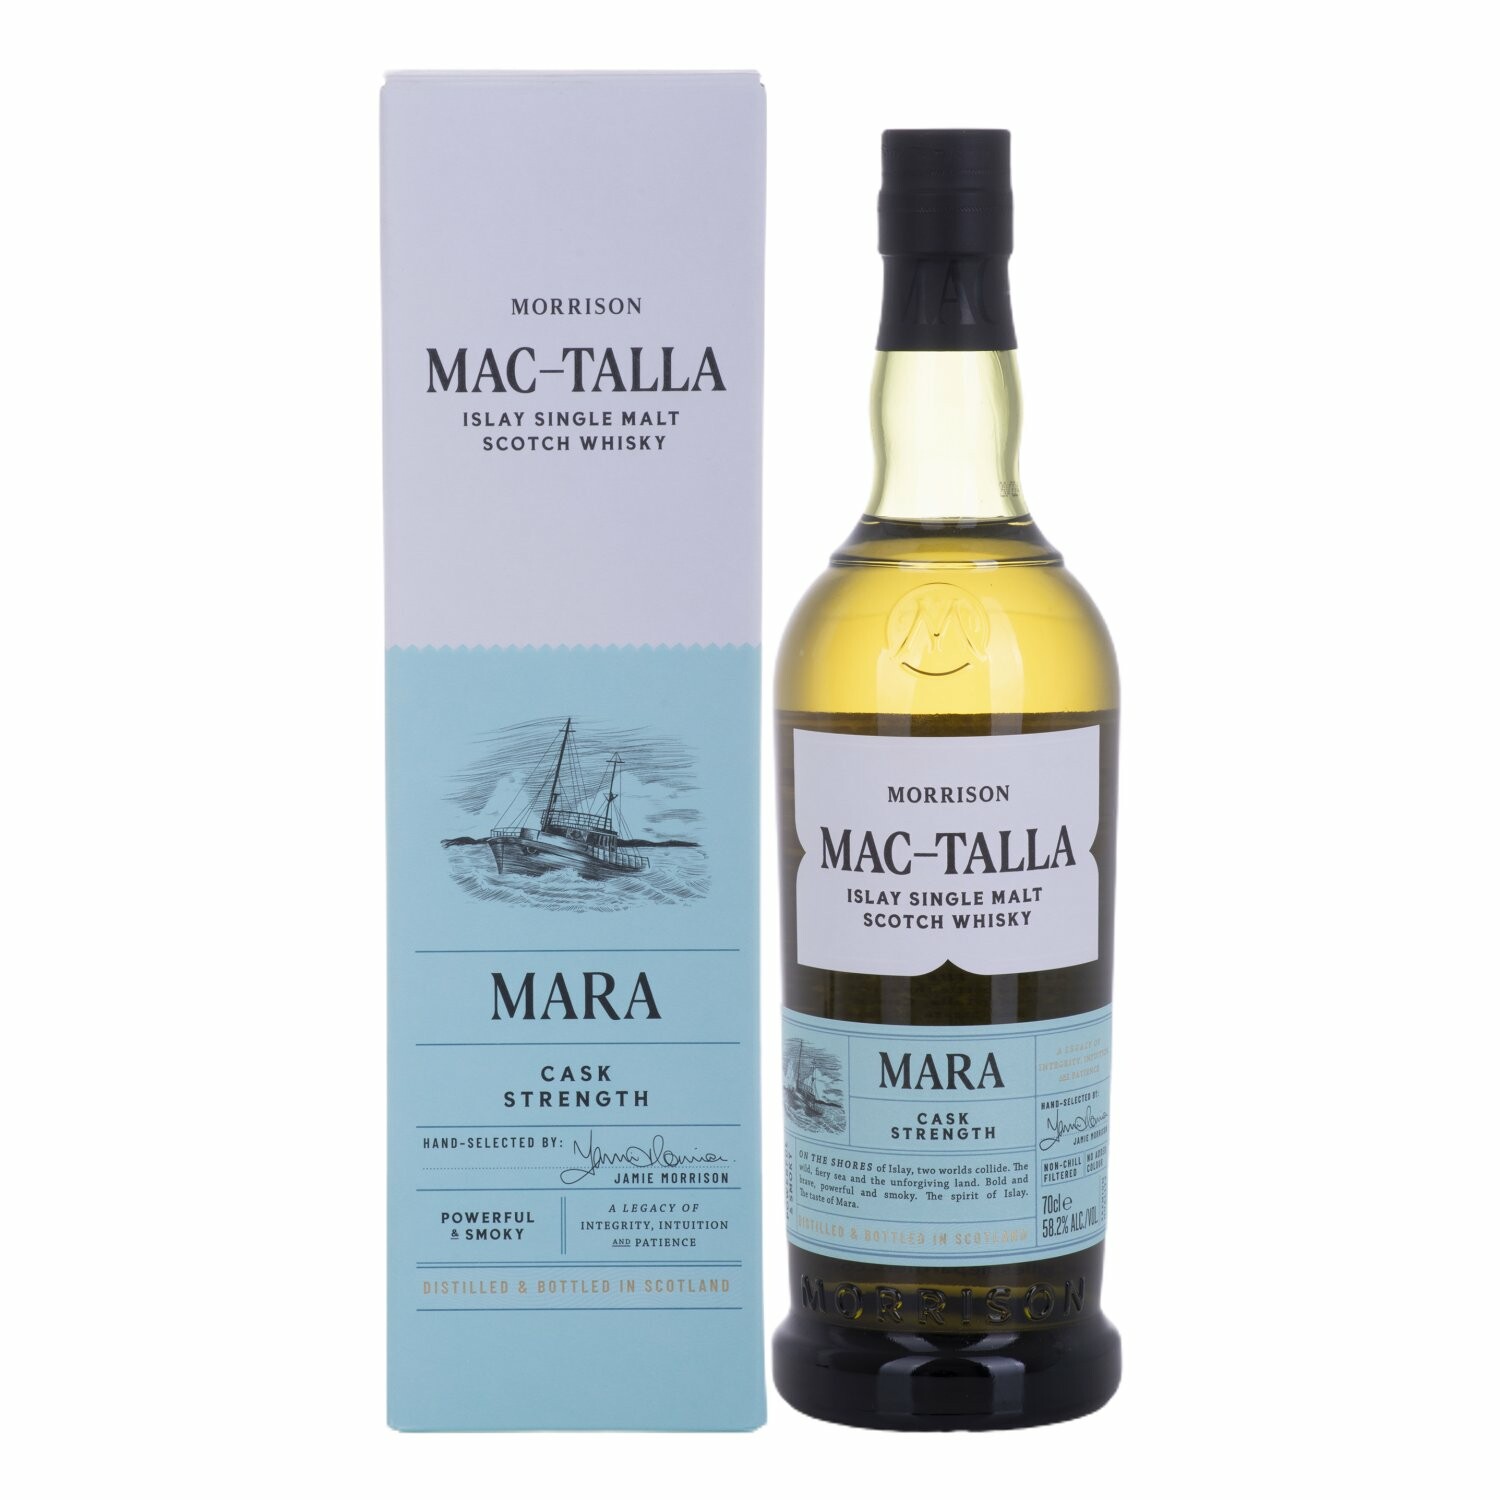 Mac-Talla Morrison MARA Cask Strength Islay Single Malt Scotch Whisky 58,2% Vol. 0,7l in Giftbox